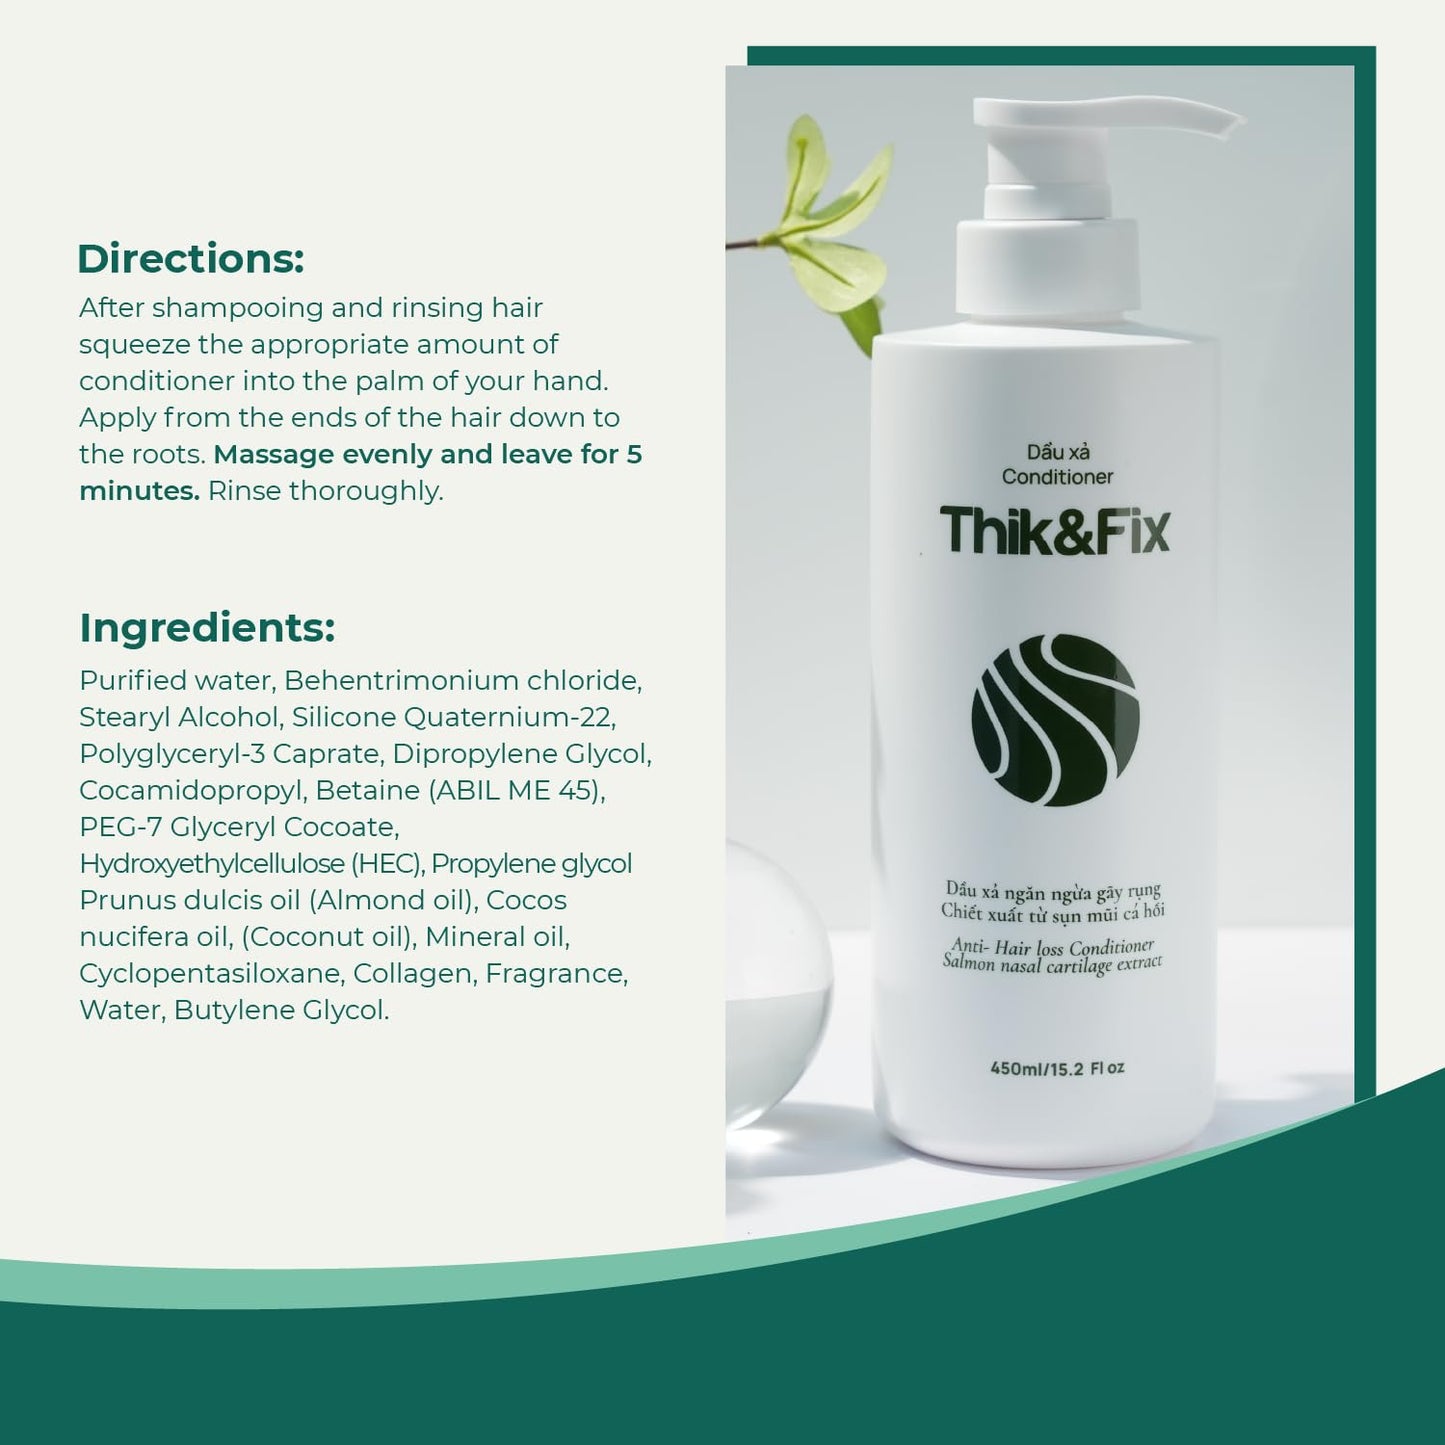 Thik&Fix Hair Loss Conditioner (15.2 Fl oz/450ml)